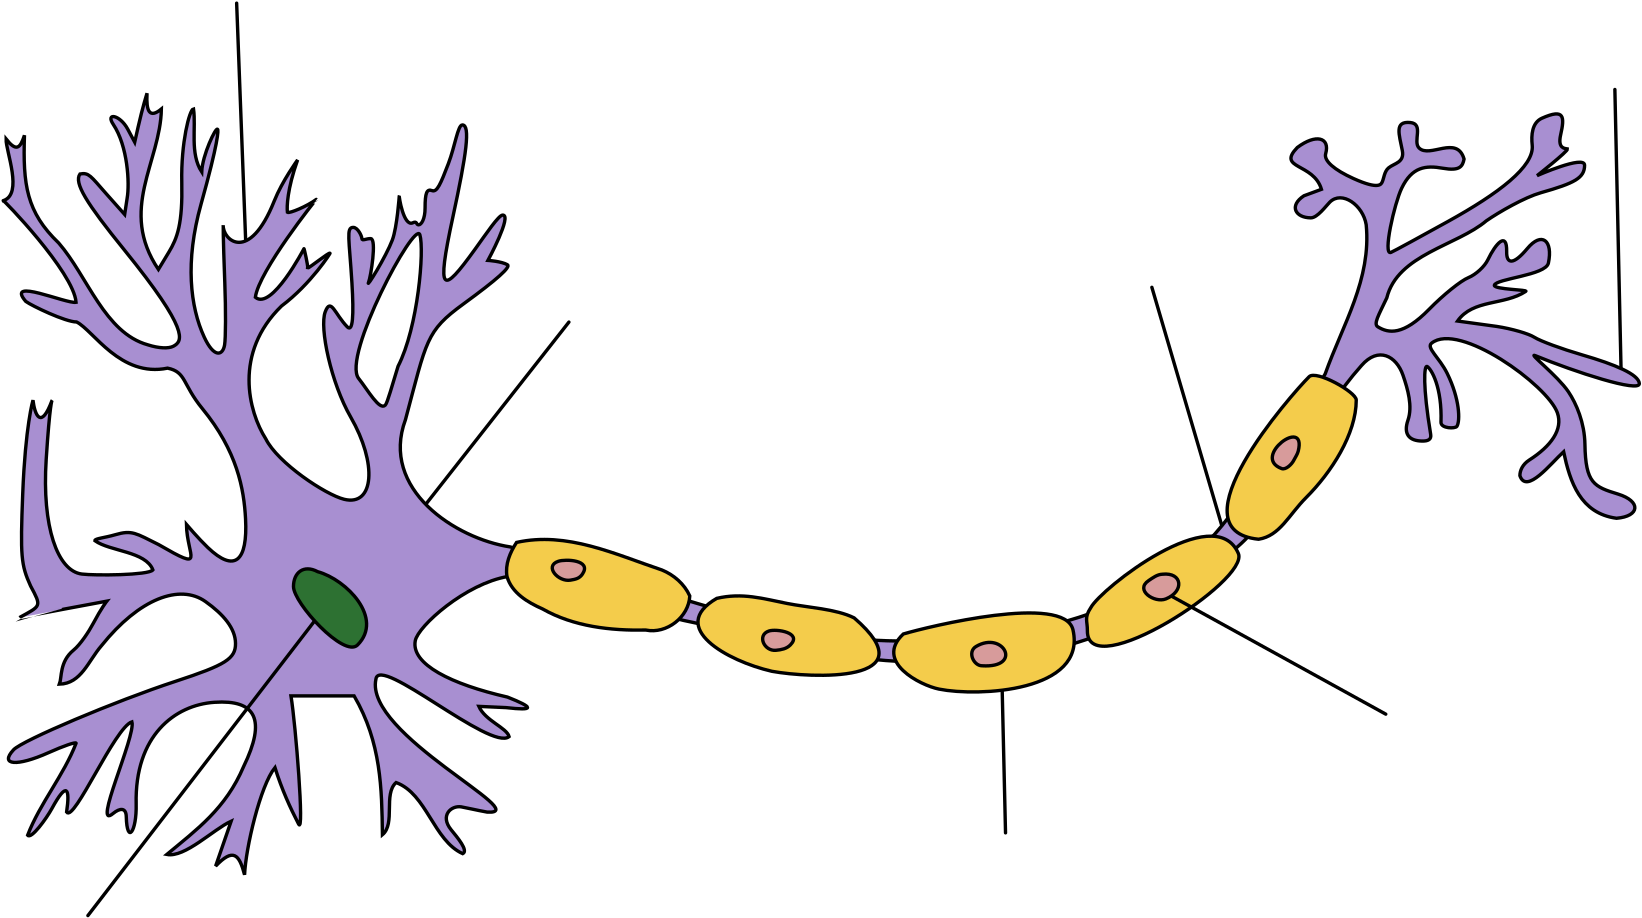 Neuron Image - Structure Of A Neuron (2000x1075)